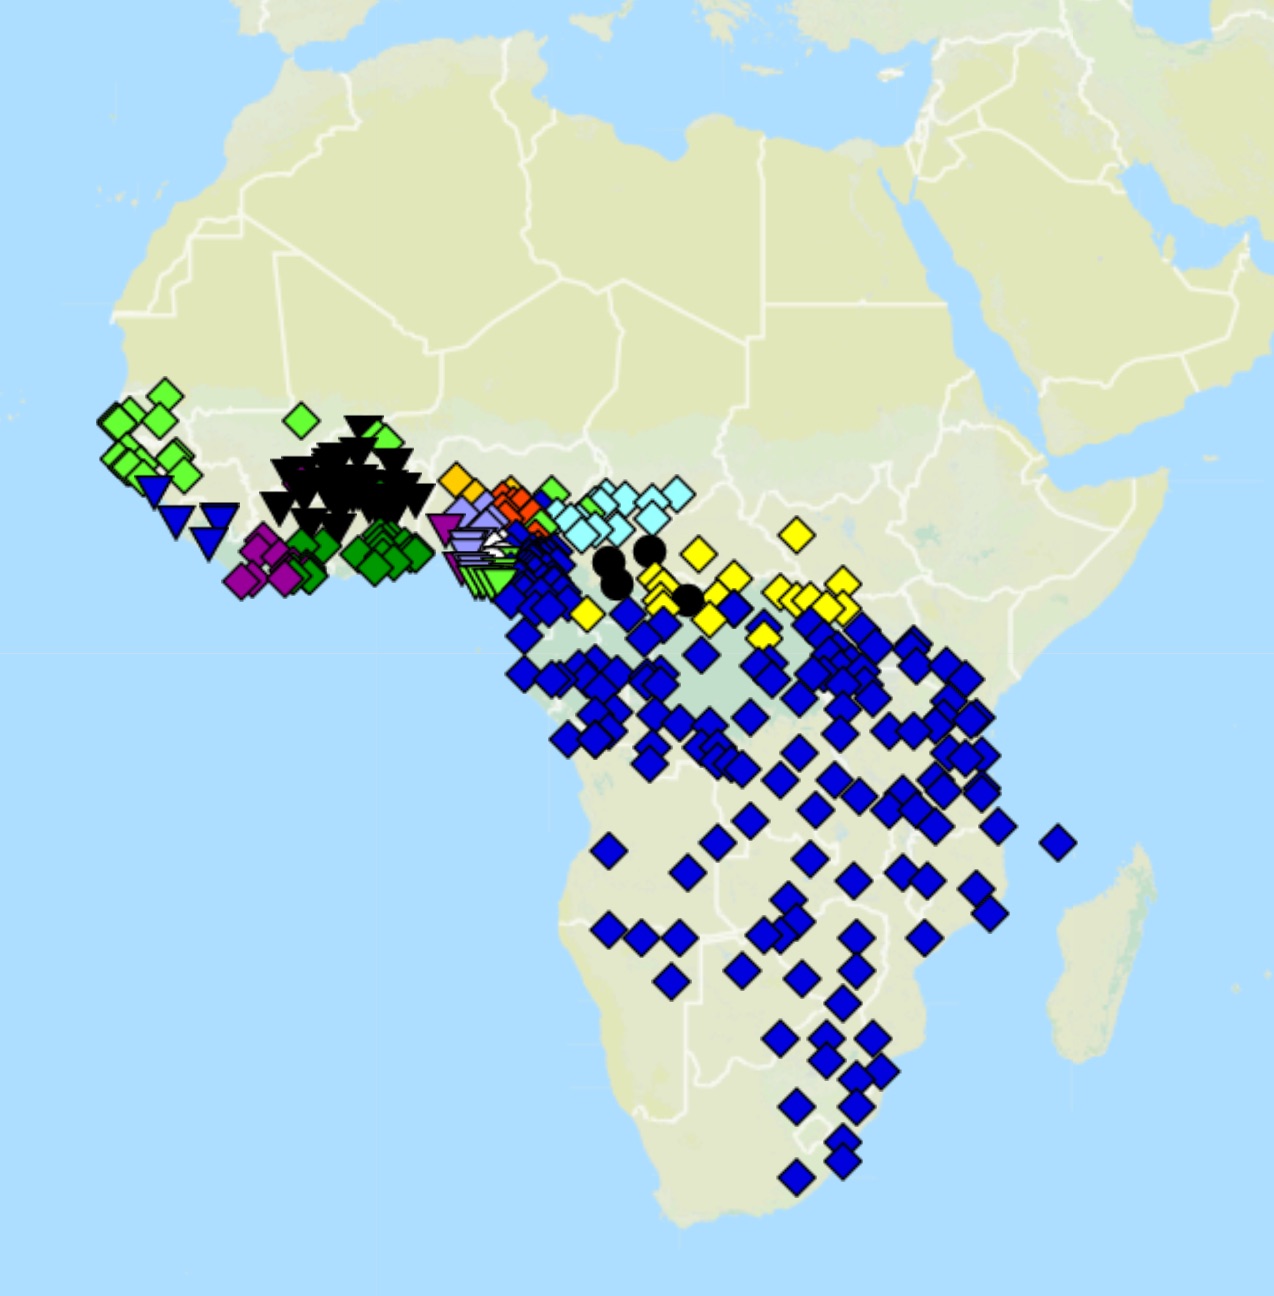 Many indicators stretching across Sub-Saharan Africa indicating the Niger-Congo languages